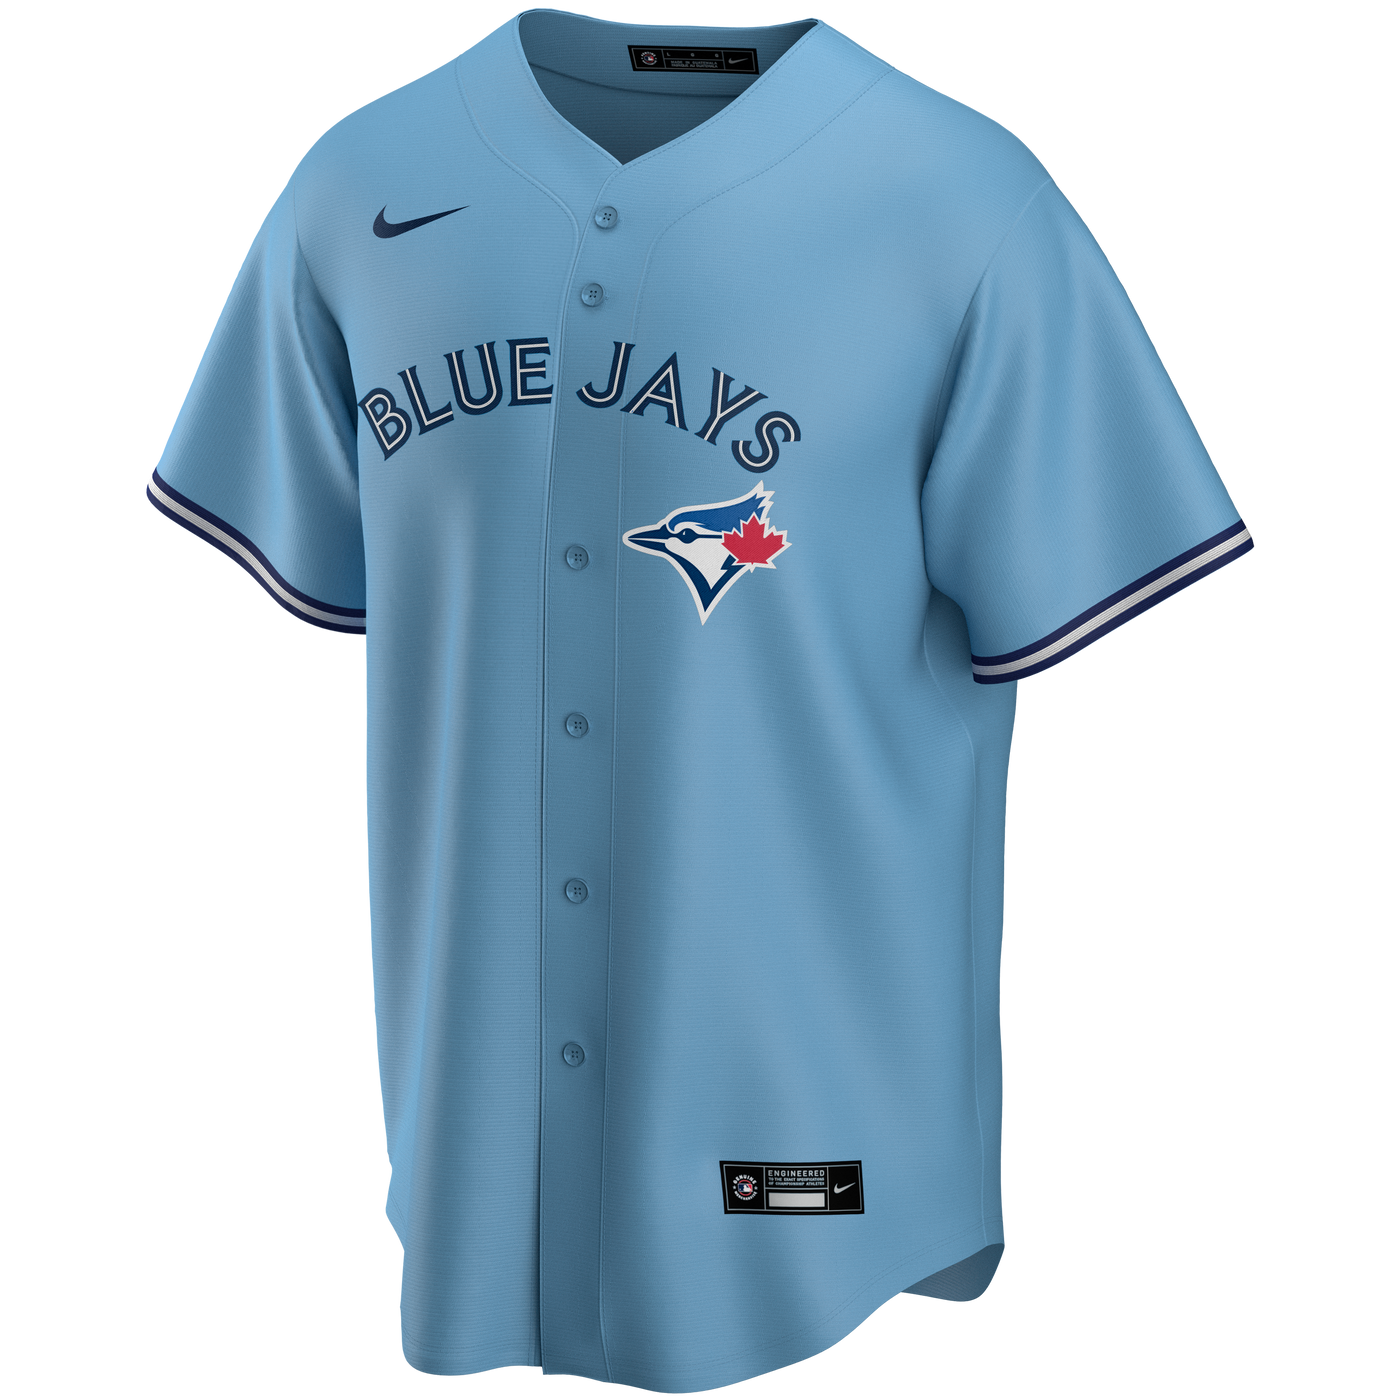 Toronto Blue Jays Gear, Blue jays Jerseys, Store, Toronto Pro Shop, Apparel